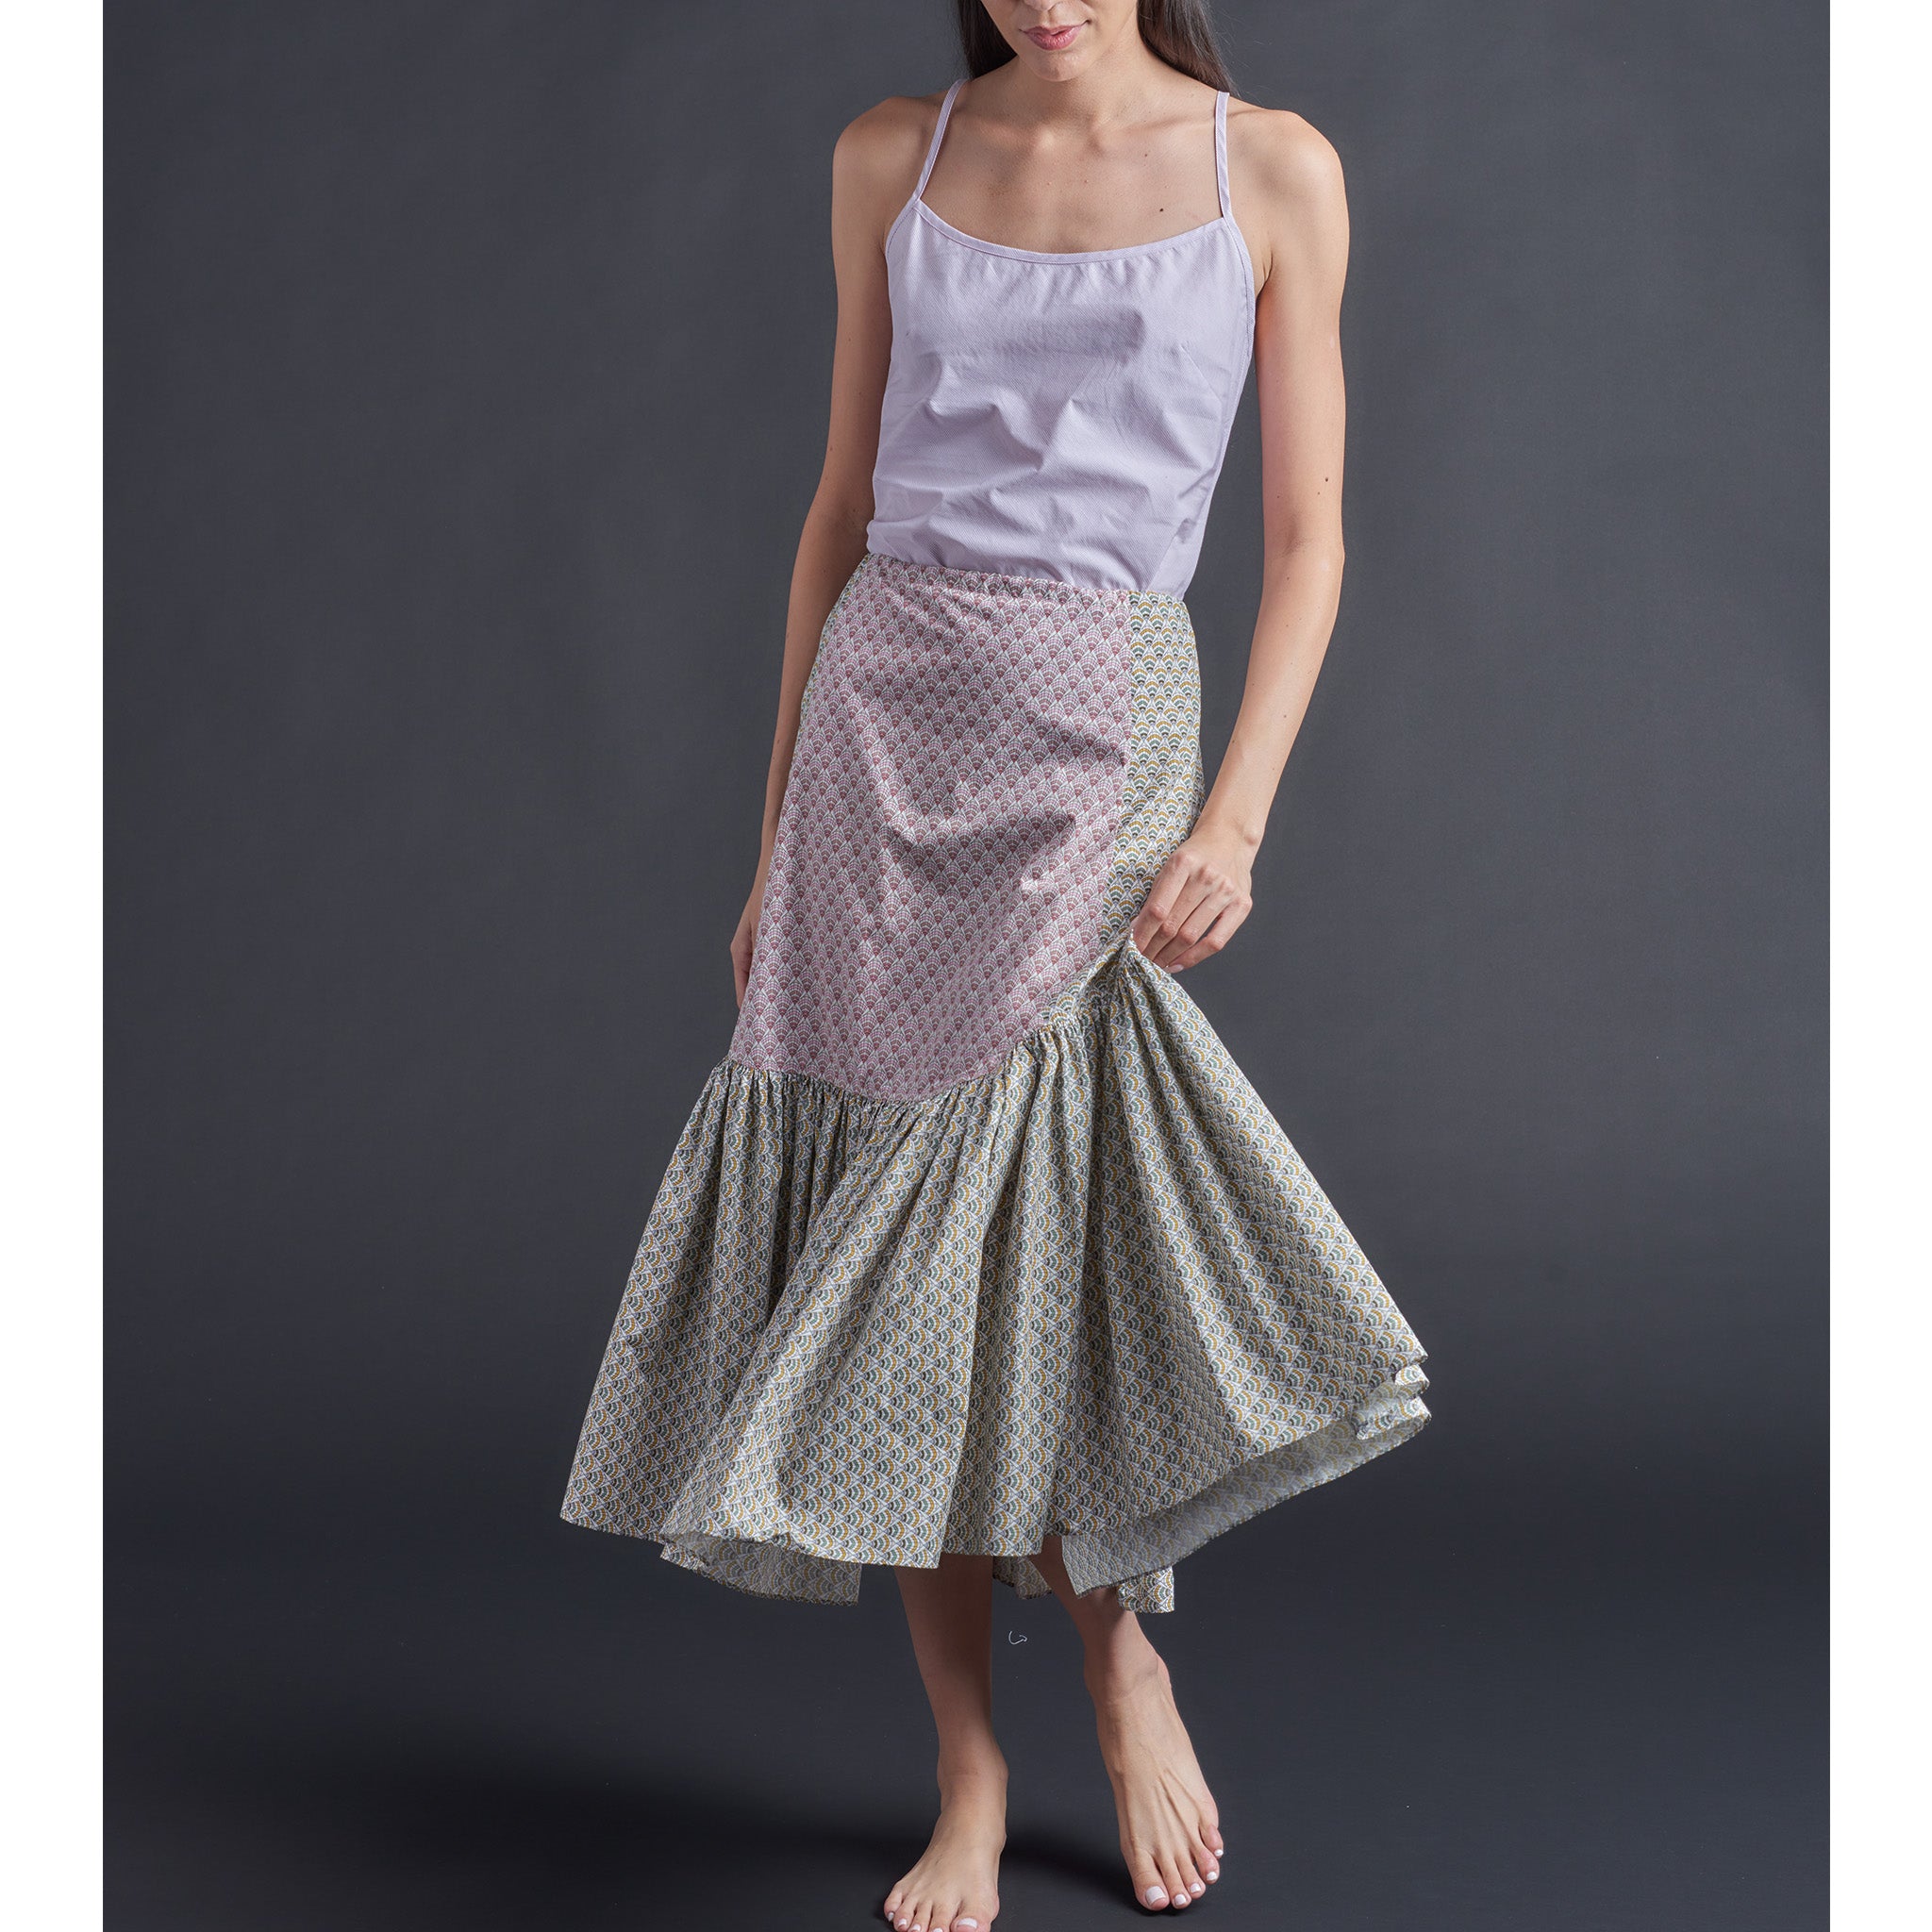 Brigitte Ruffle Skirt in Liberty Print Mary Anning Cotton